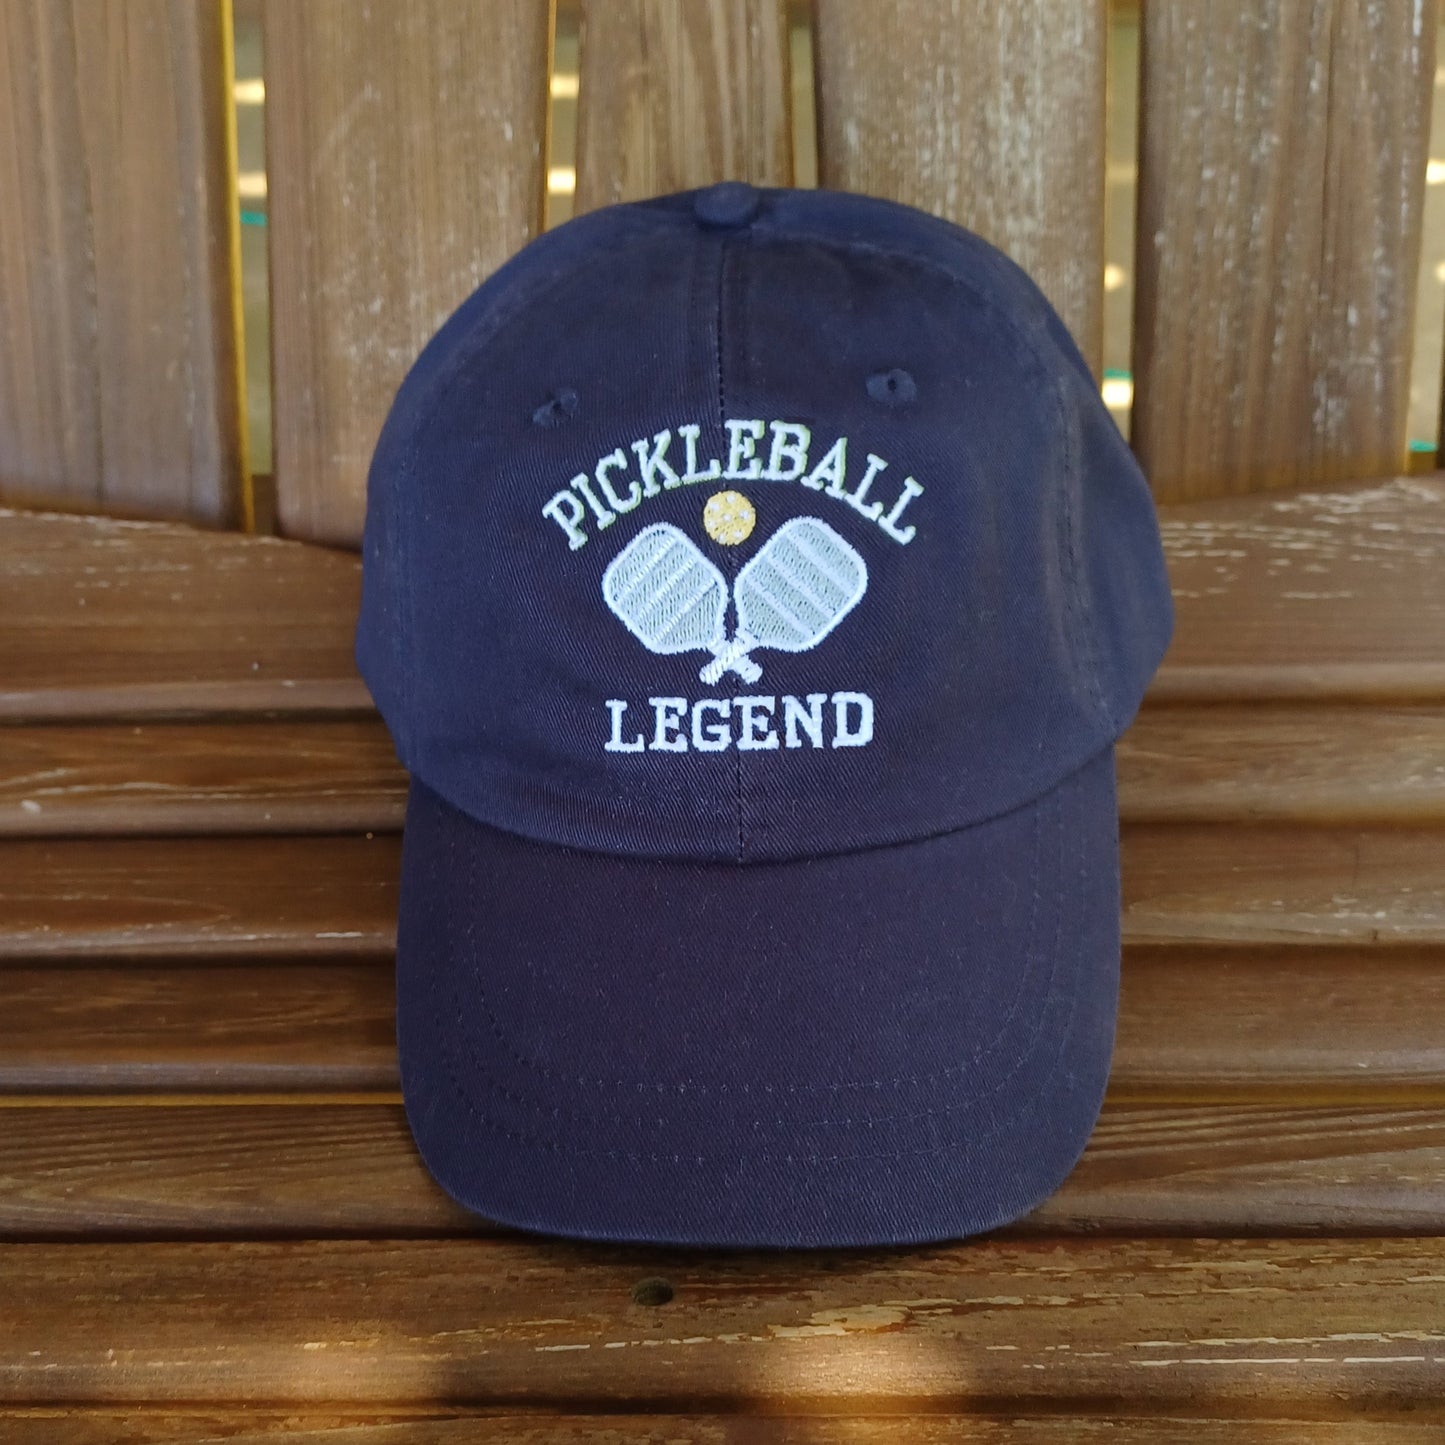 pickleball legend hat